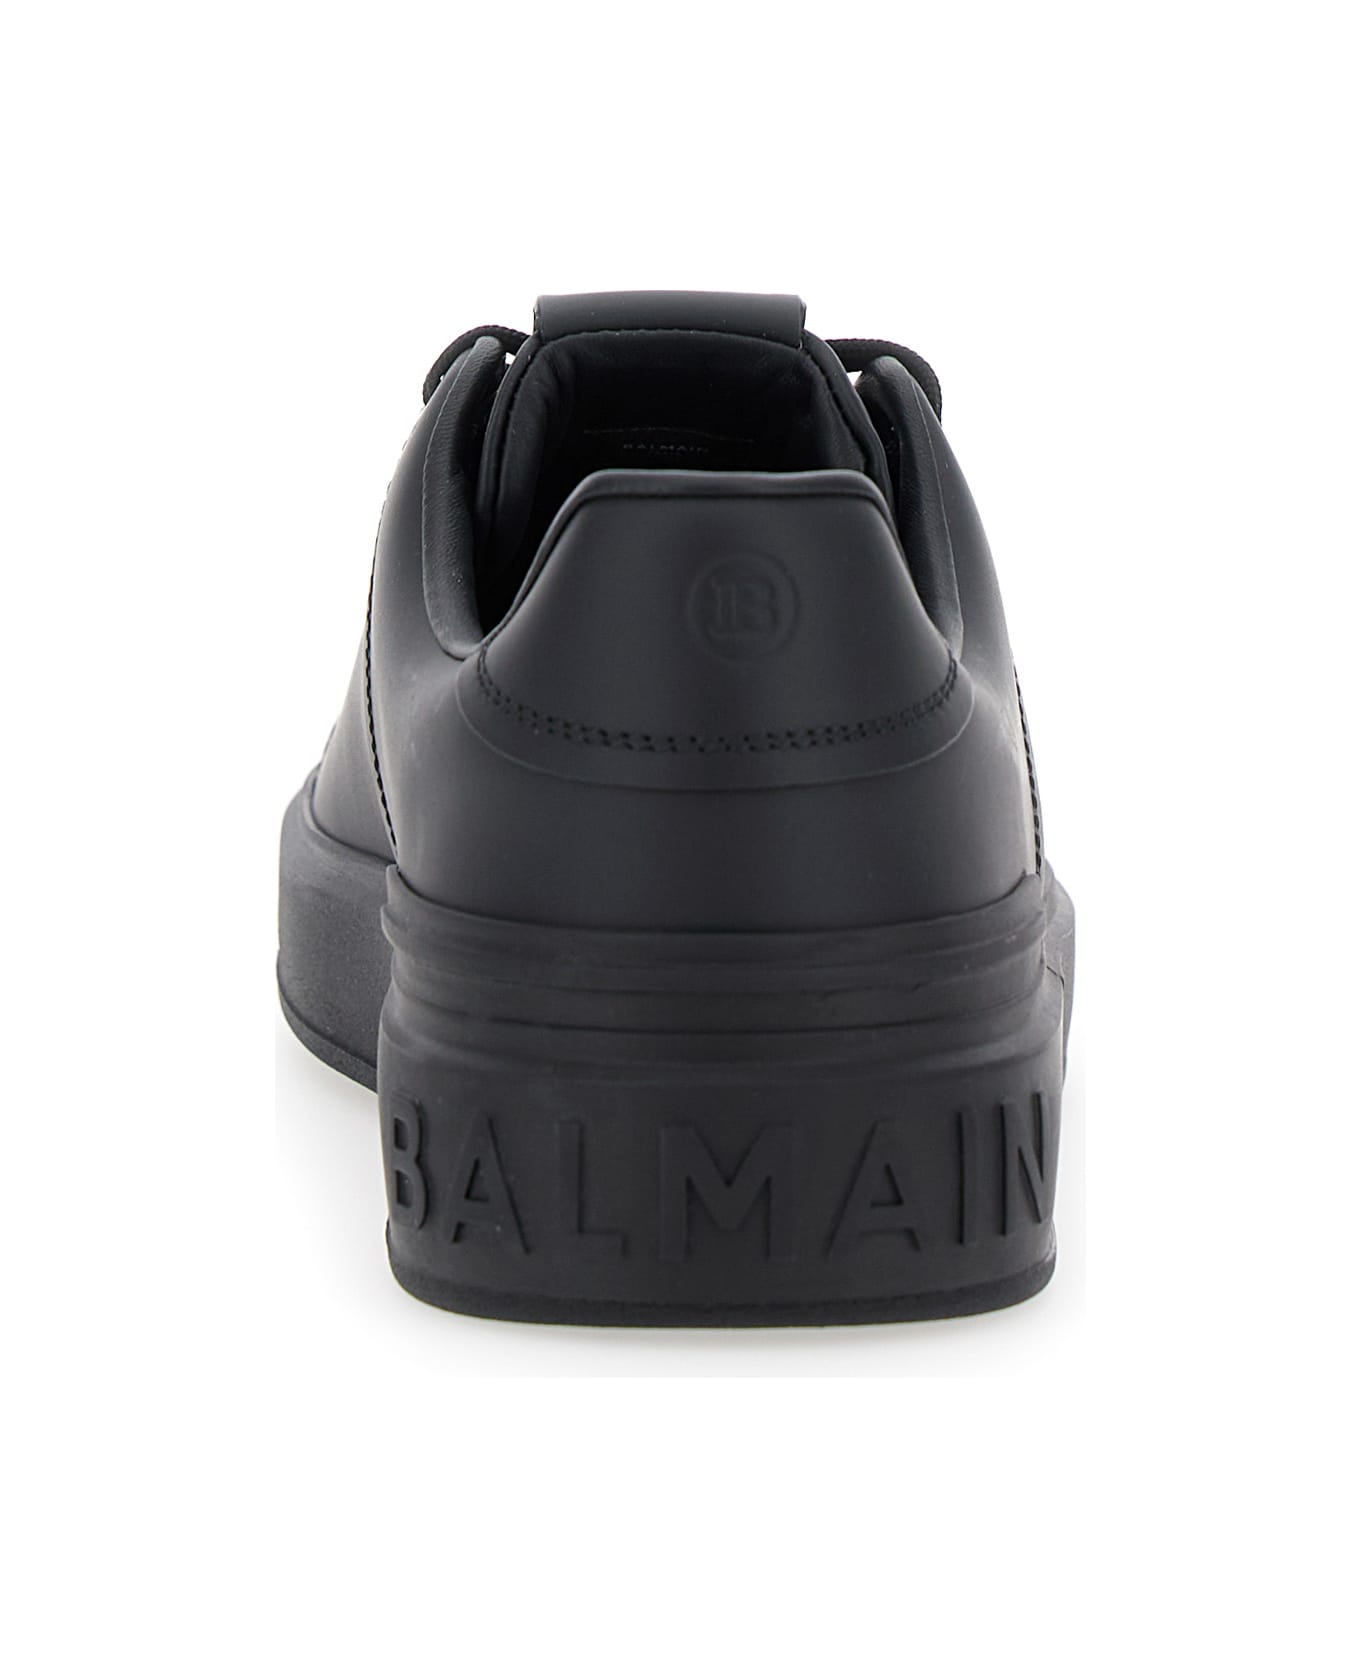 Balmain B-court Sneakers - Black スニーカー